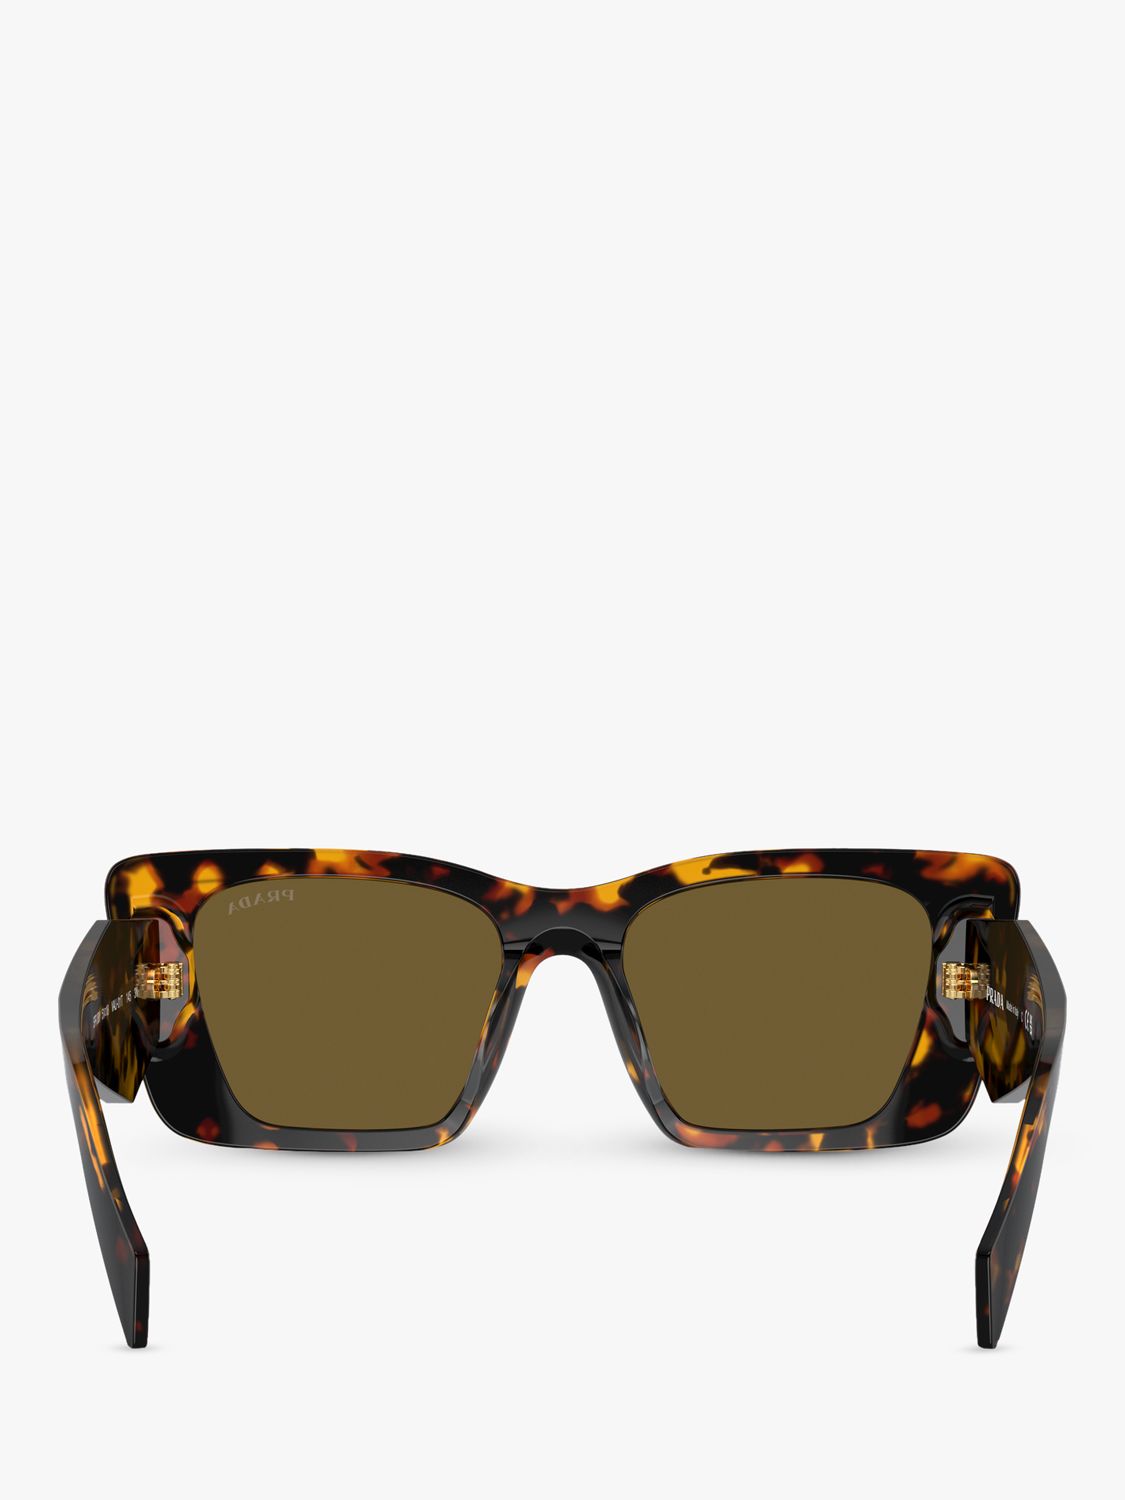 Prada PR 08YS Women's Butterfly Sunglasses, Honey Tortoise/Brown